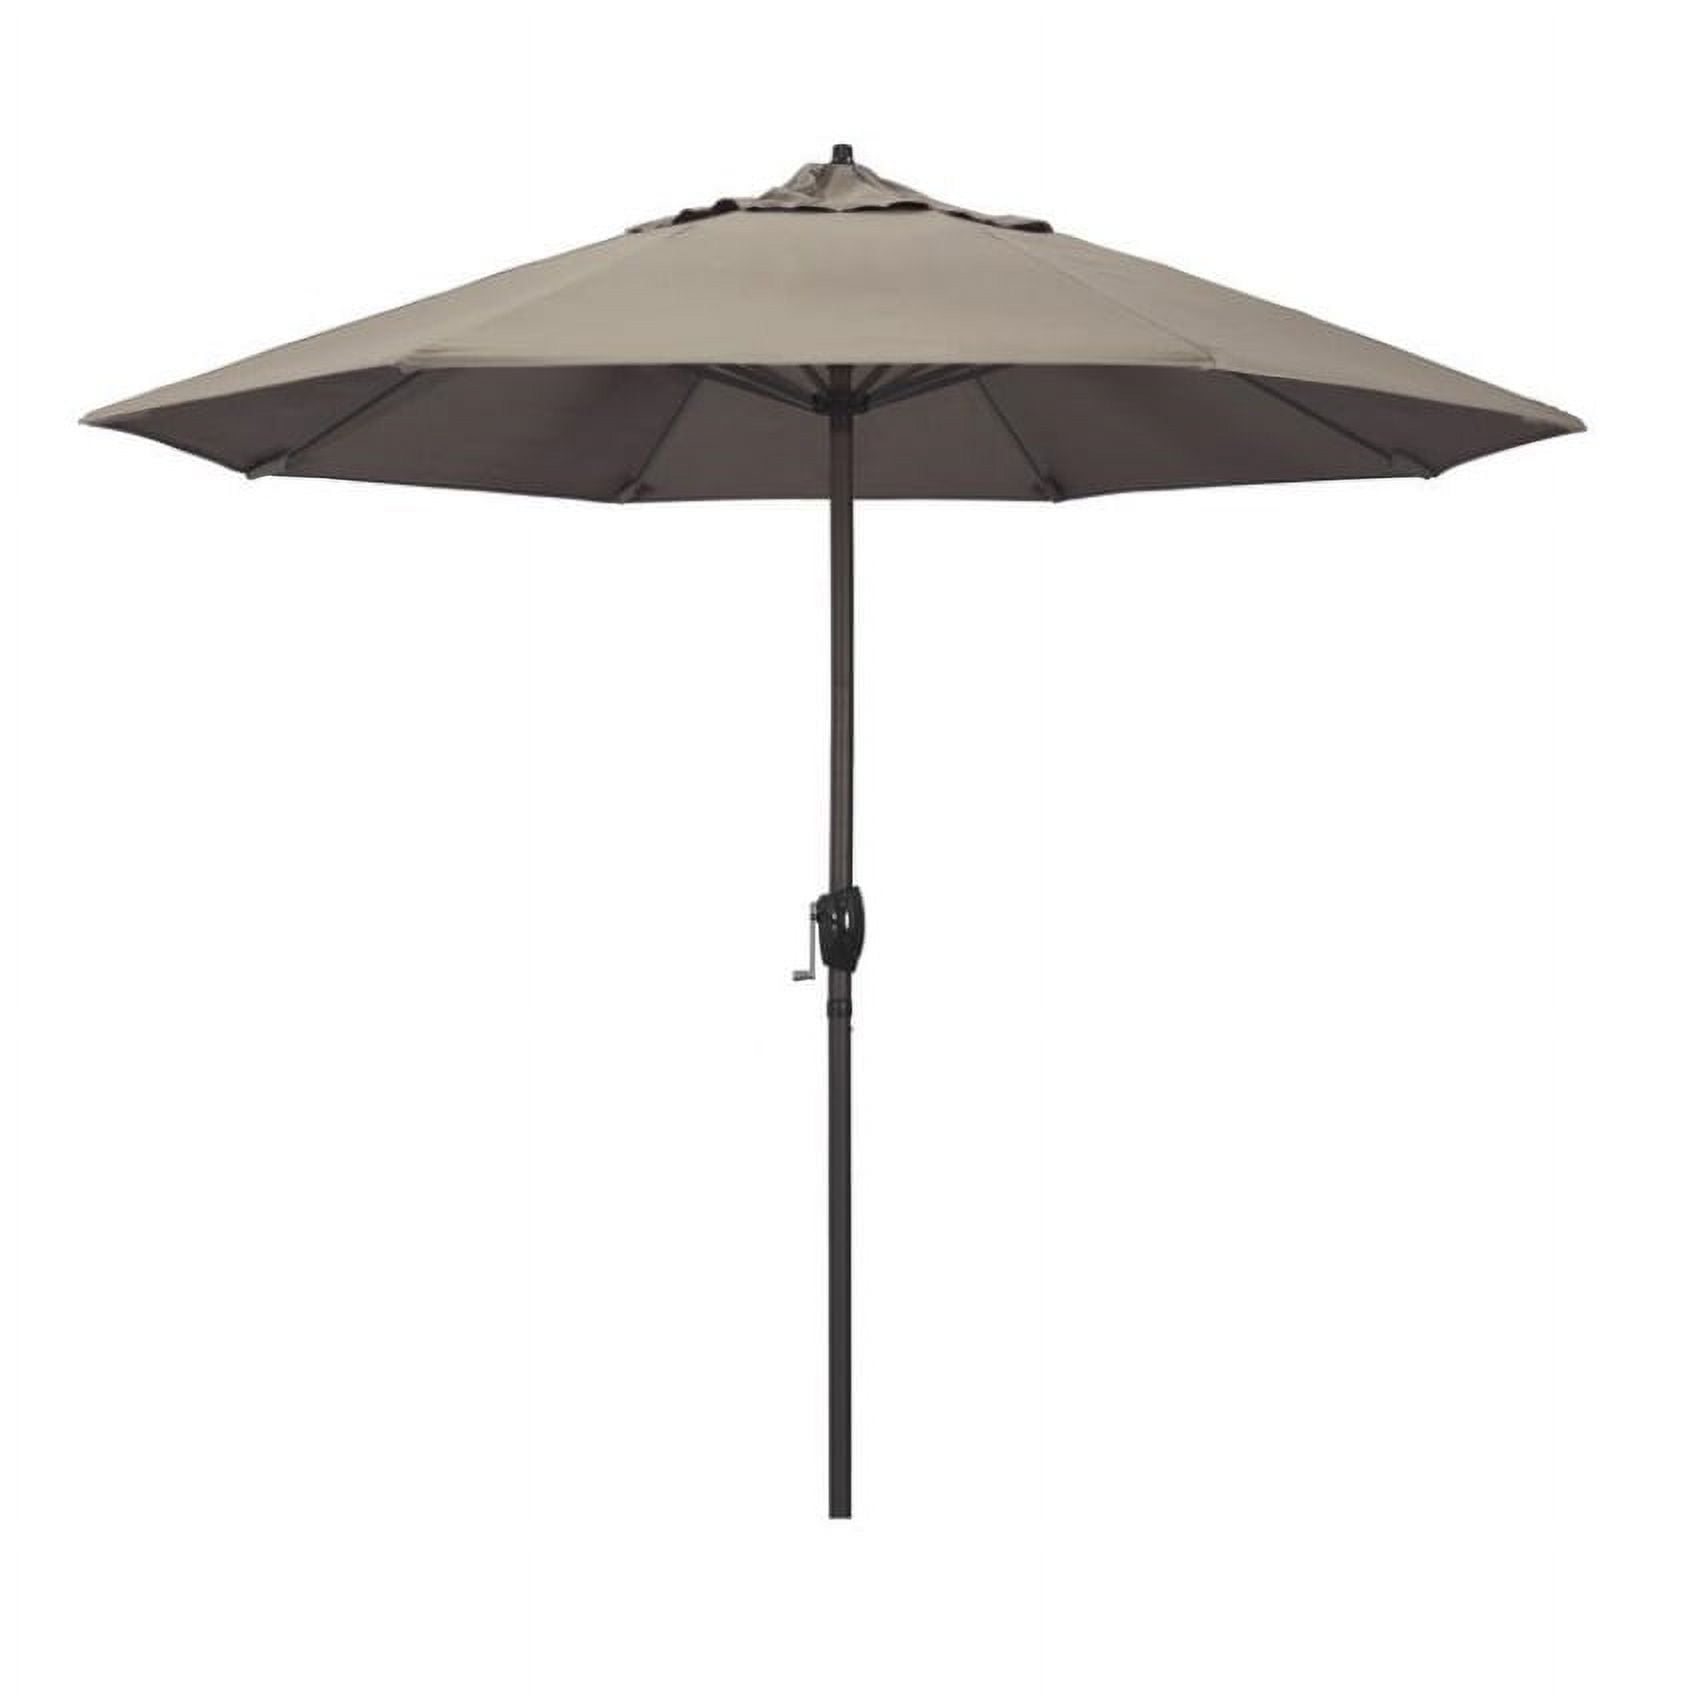 Ata908117-5461 9 Ft. Casa Series Patio Bronze Auto Tilt Crank Lift - Sunbrella 1a Taupe Fabric